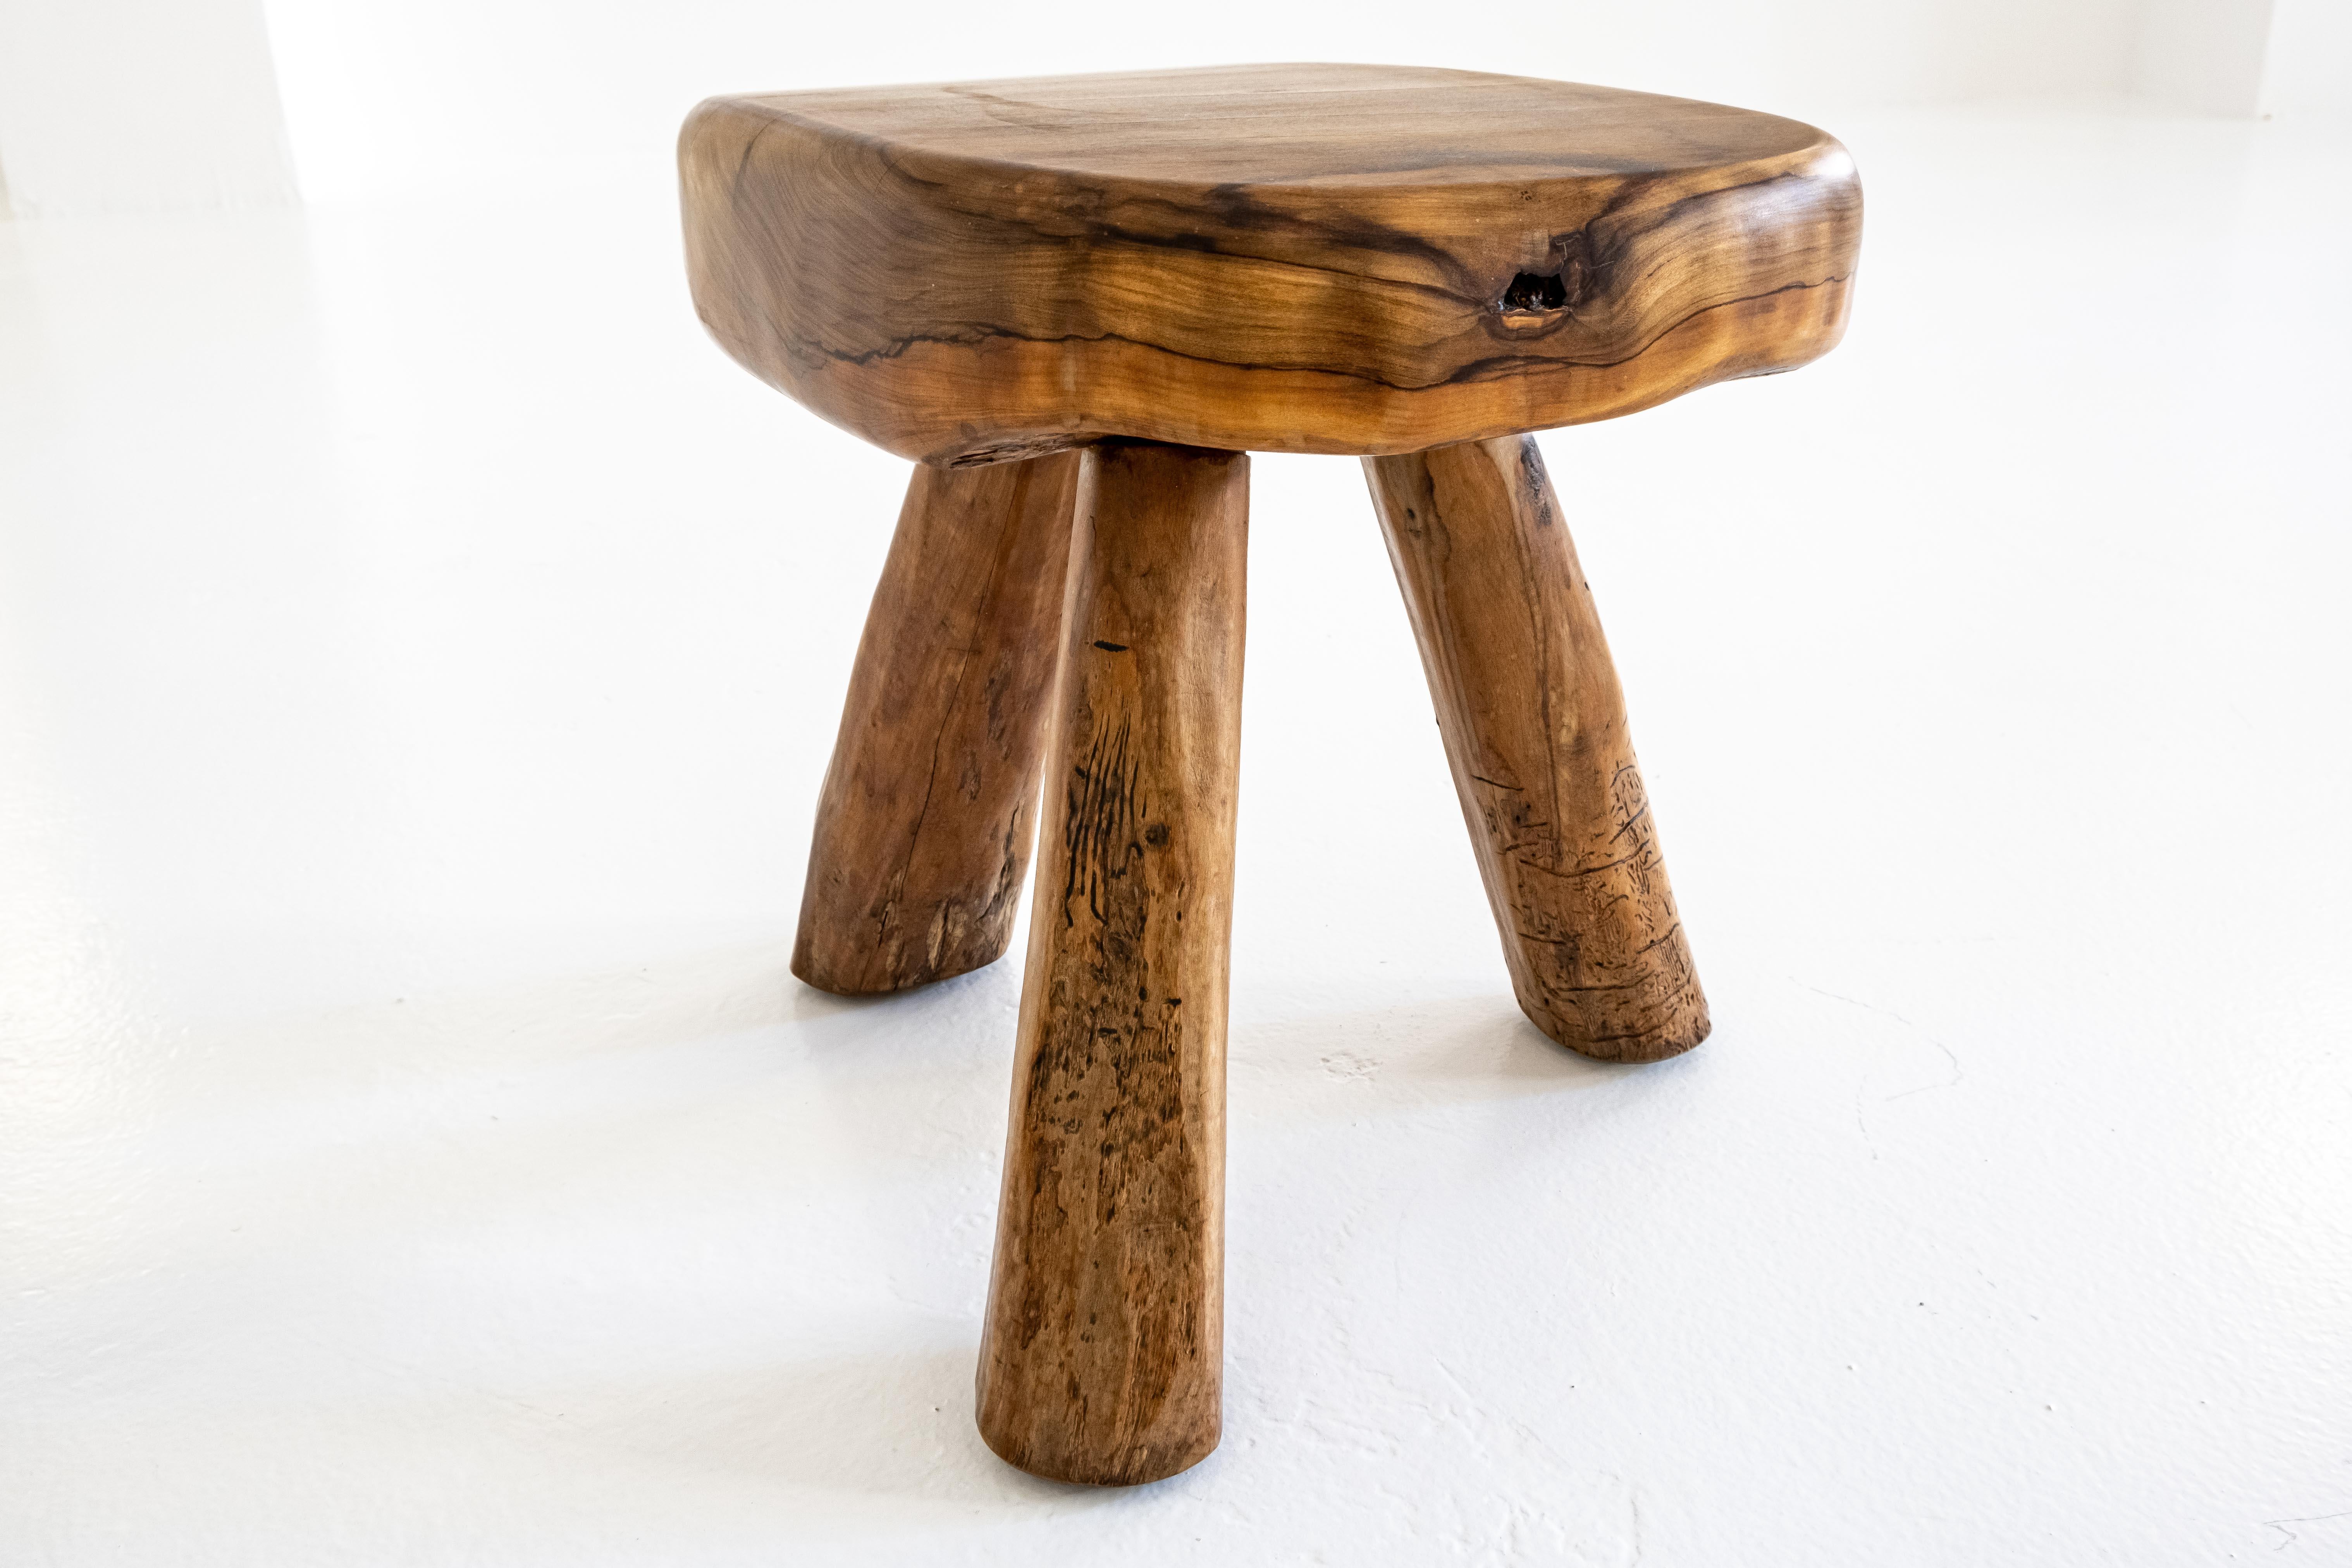 Handmade, Rustic, Sculptural, Massiv Olive Wood Tripod Stool or Side Table 4